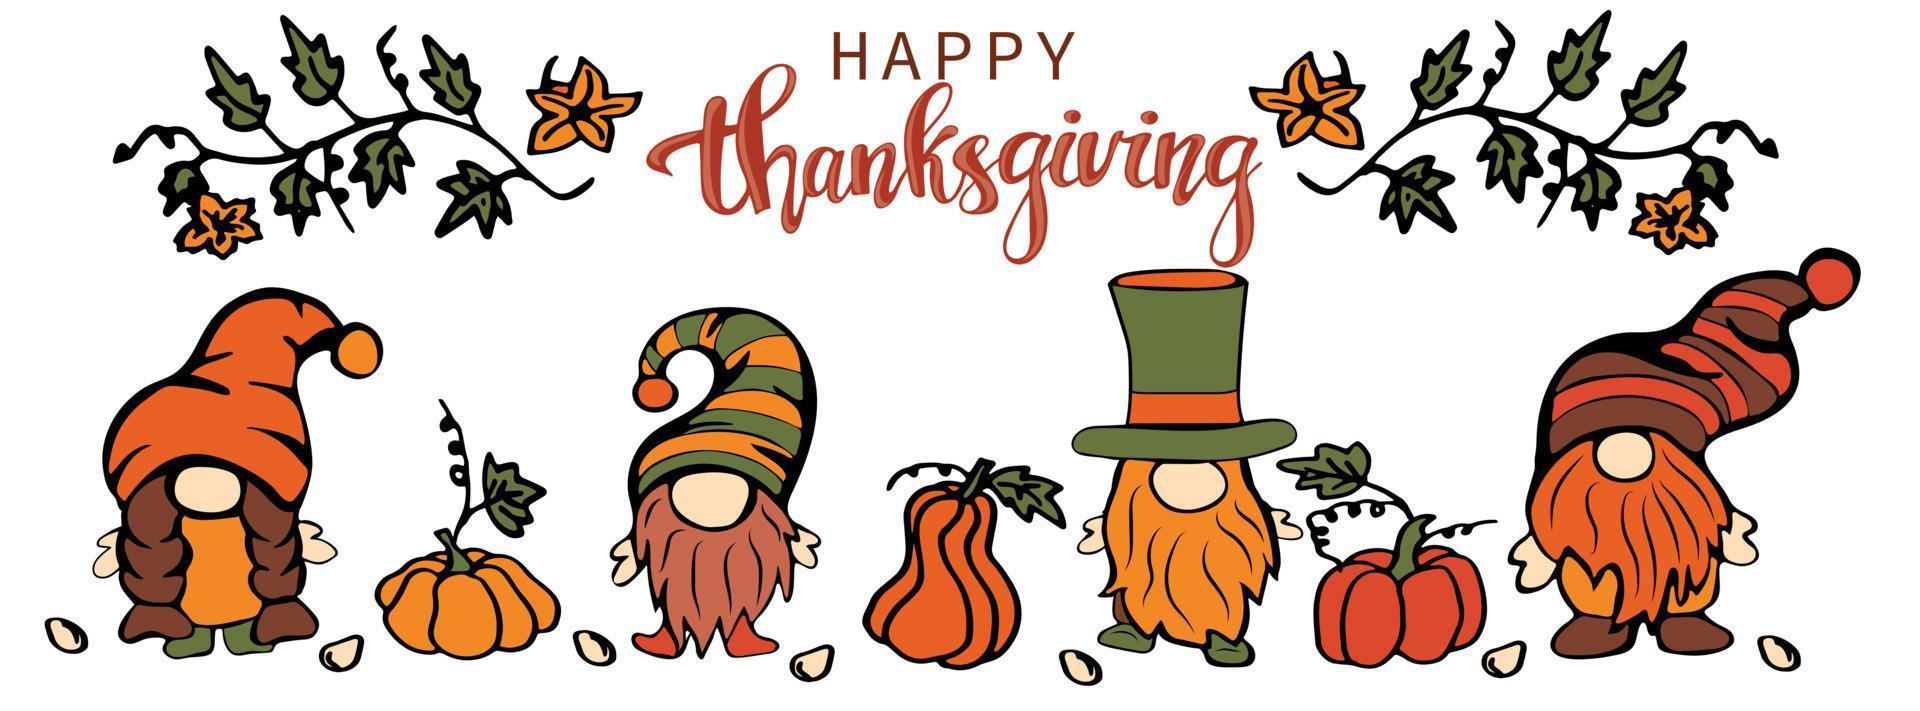 Thanksgiving gnomes with pumpkins. Cartoon hand drawn Leprechauns for cards, decor, shirt design, invitations vector